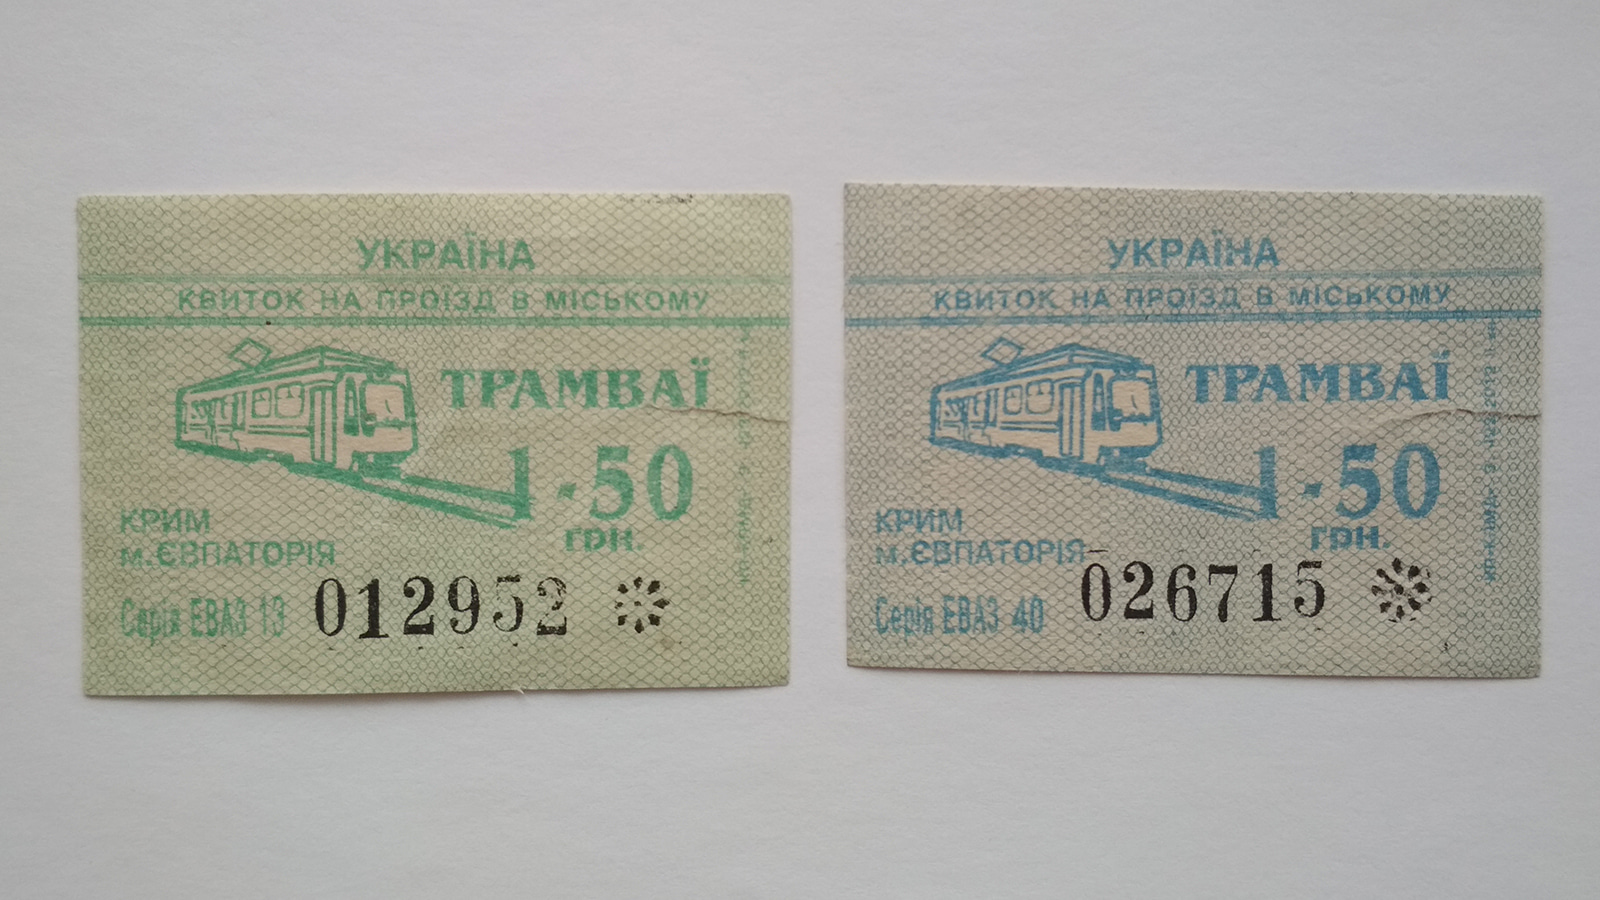 Jevpatorija — Tickets